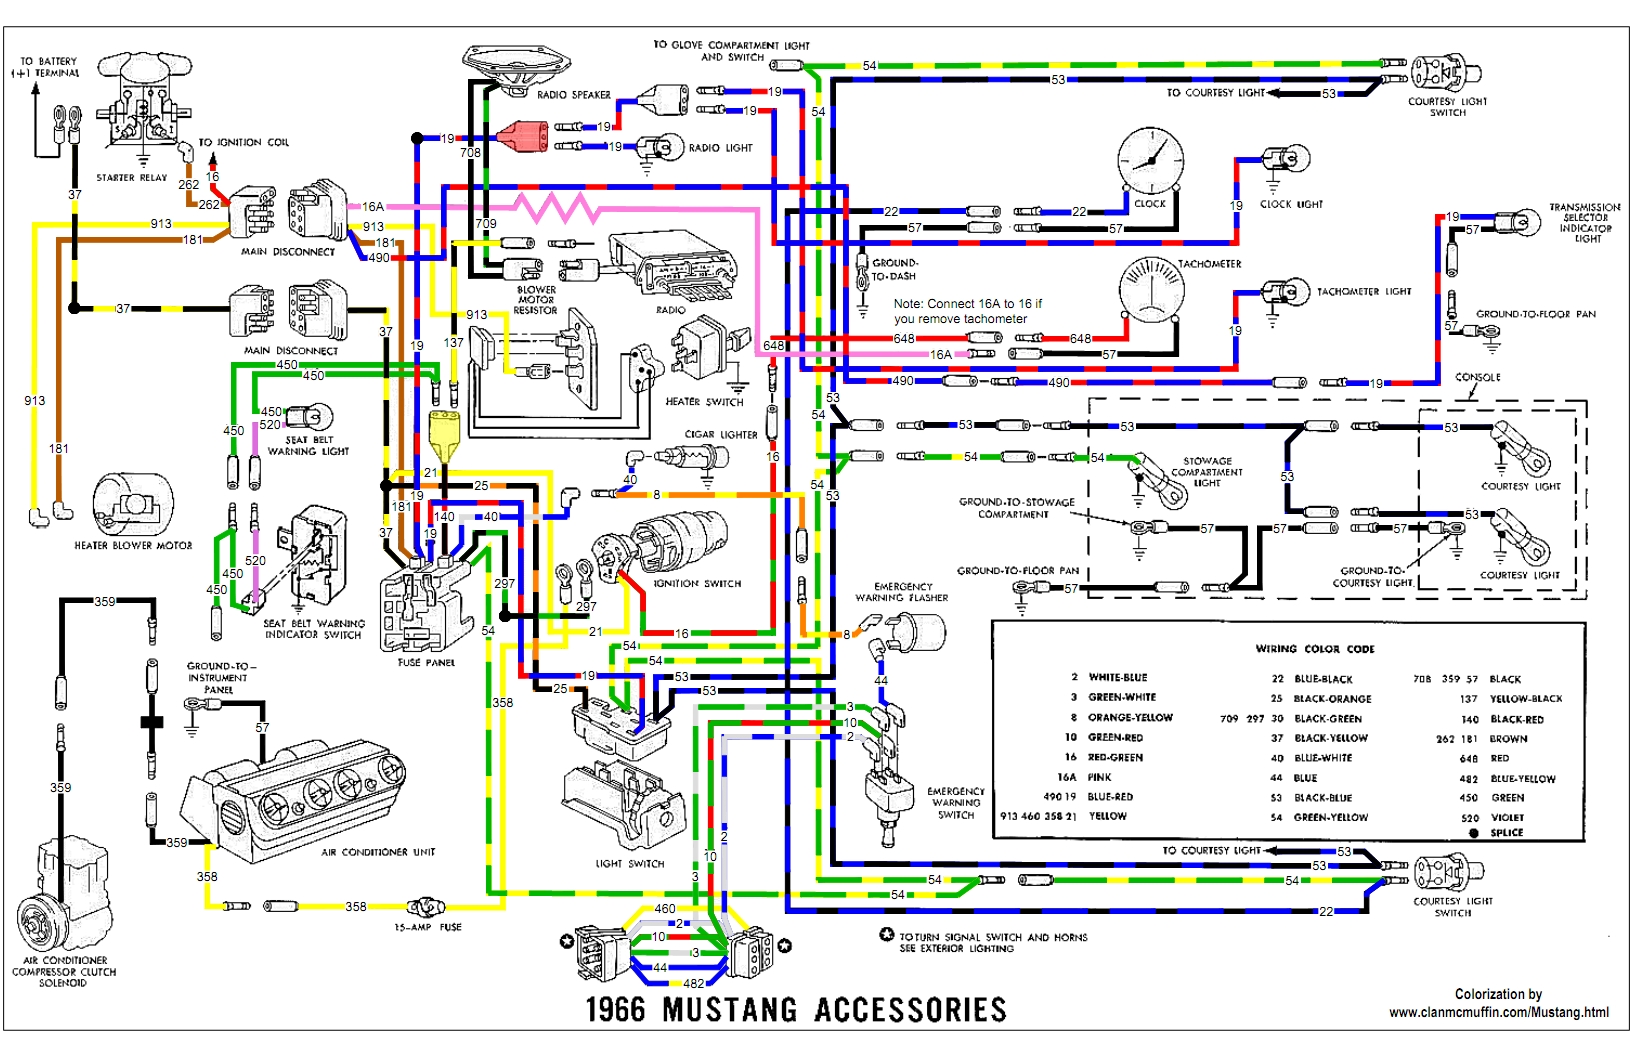 Accessories Schematic (Colorized)